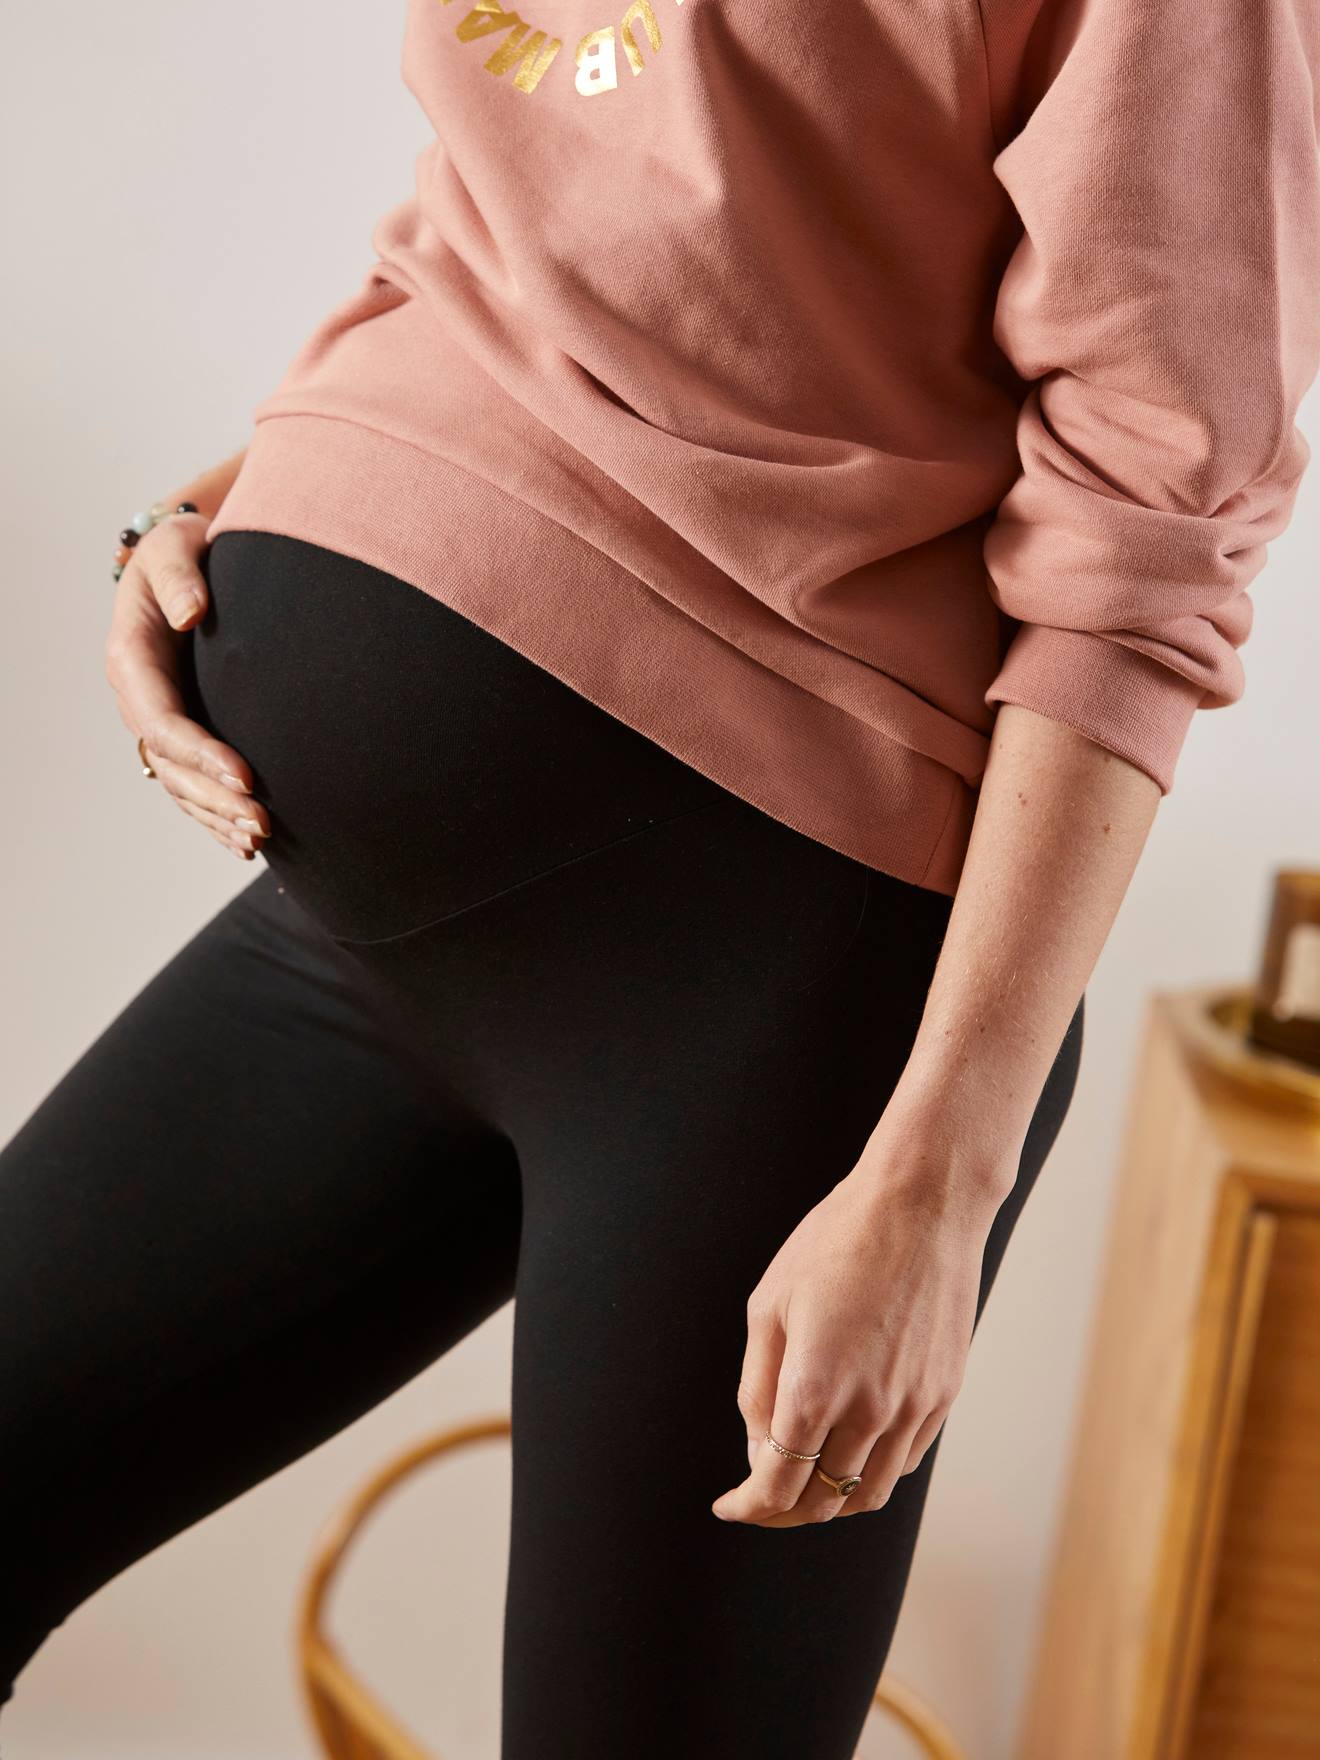 Leggings premamá Vertbaudet - Ropa confortable para mujer embarazada -  vertbaudet